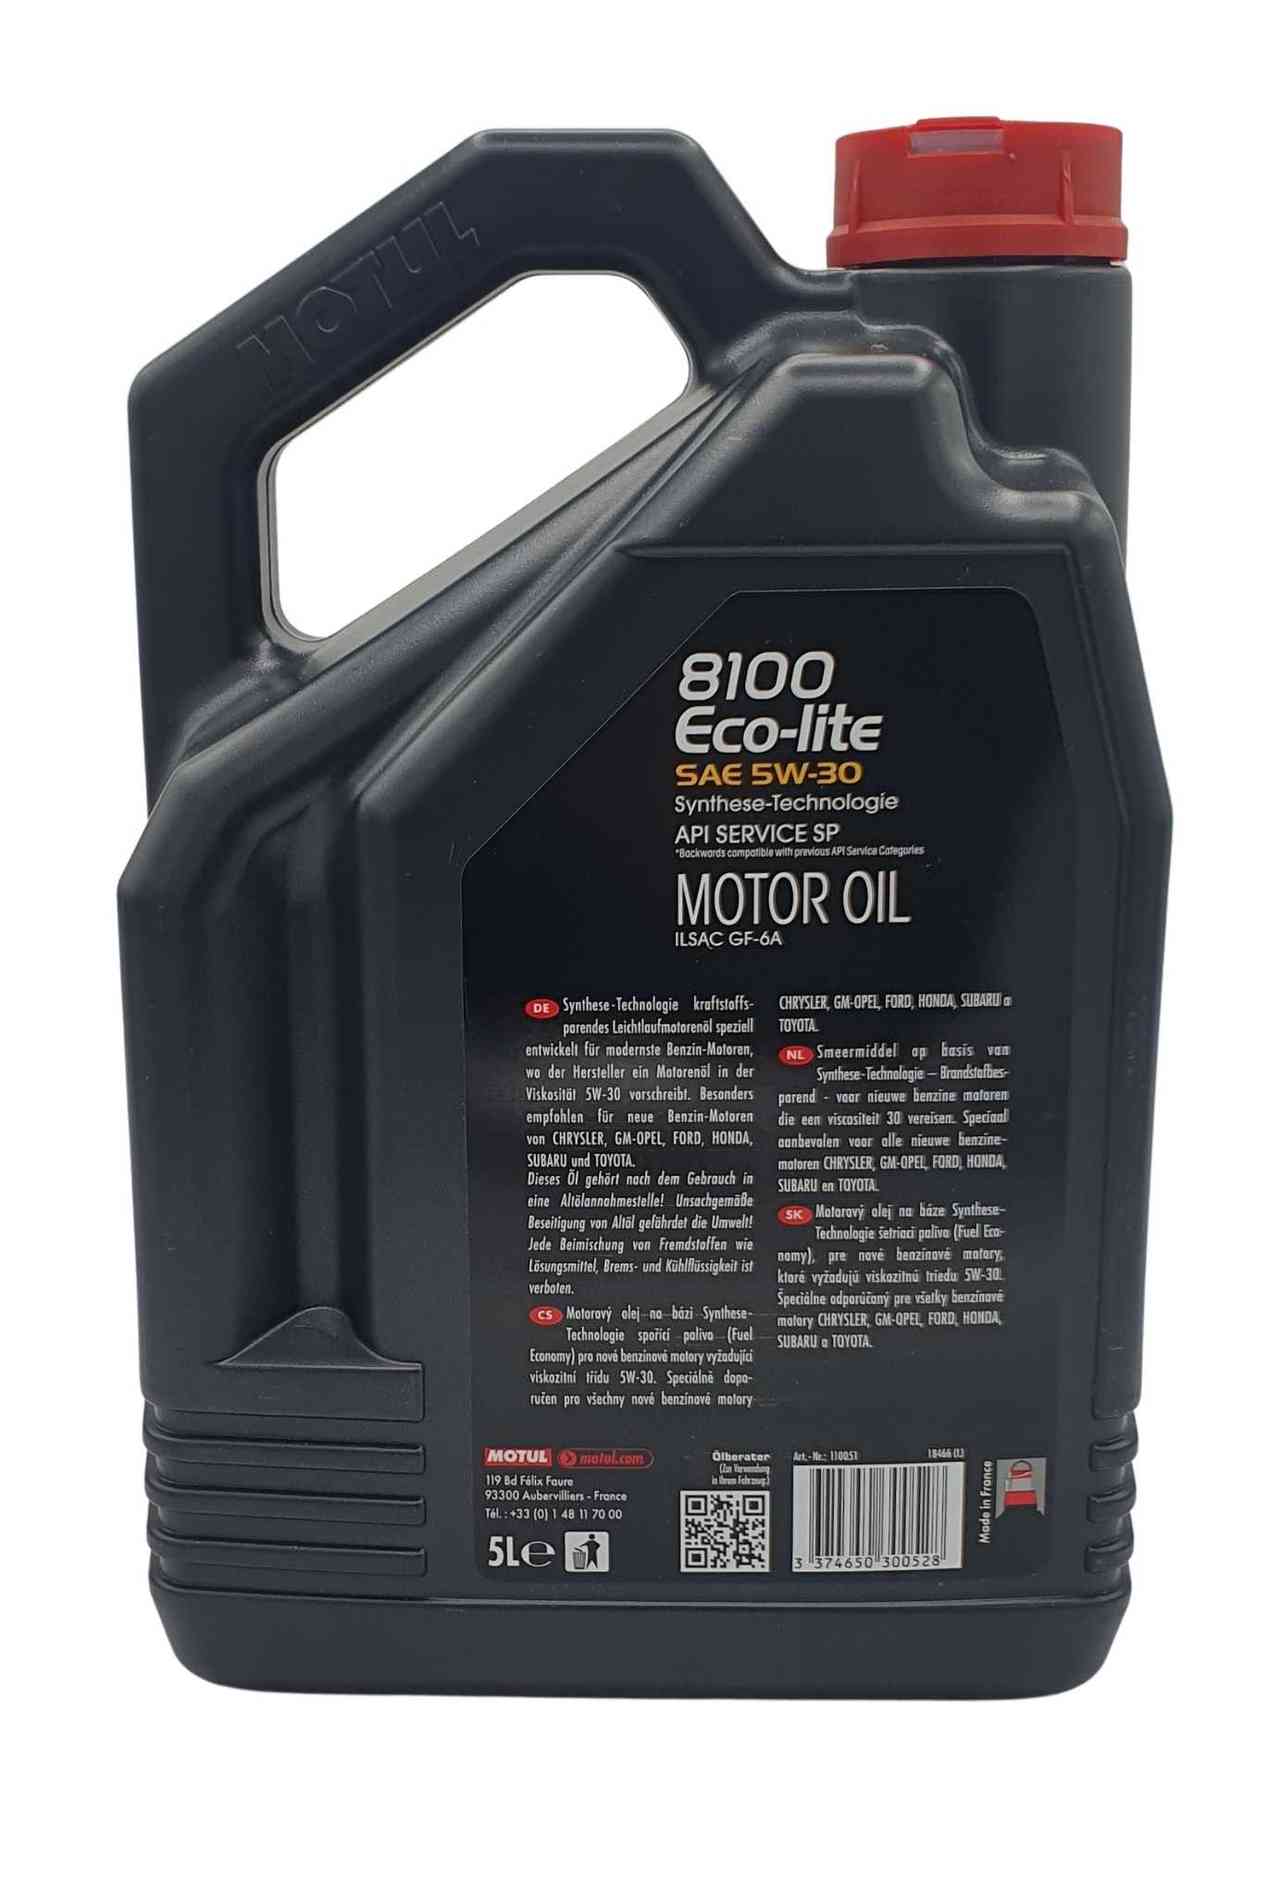 Motul 8100 Eco-lite 5W-30 5 Liter